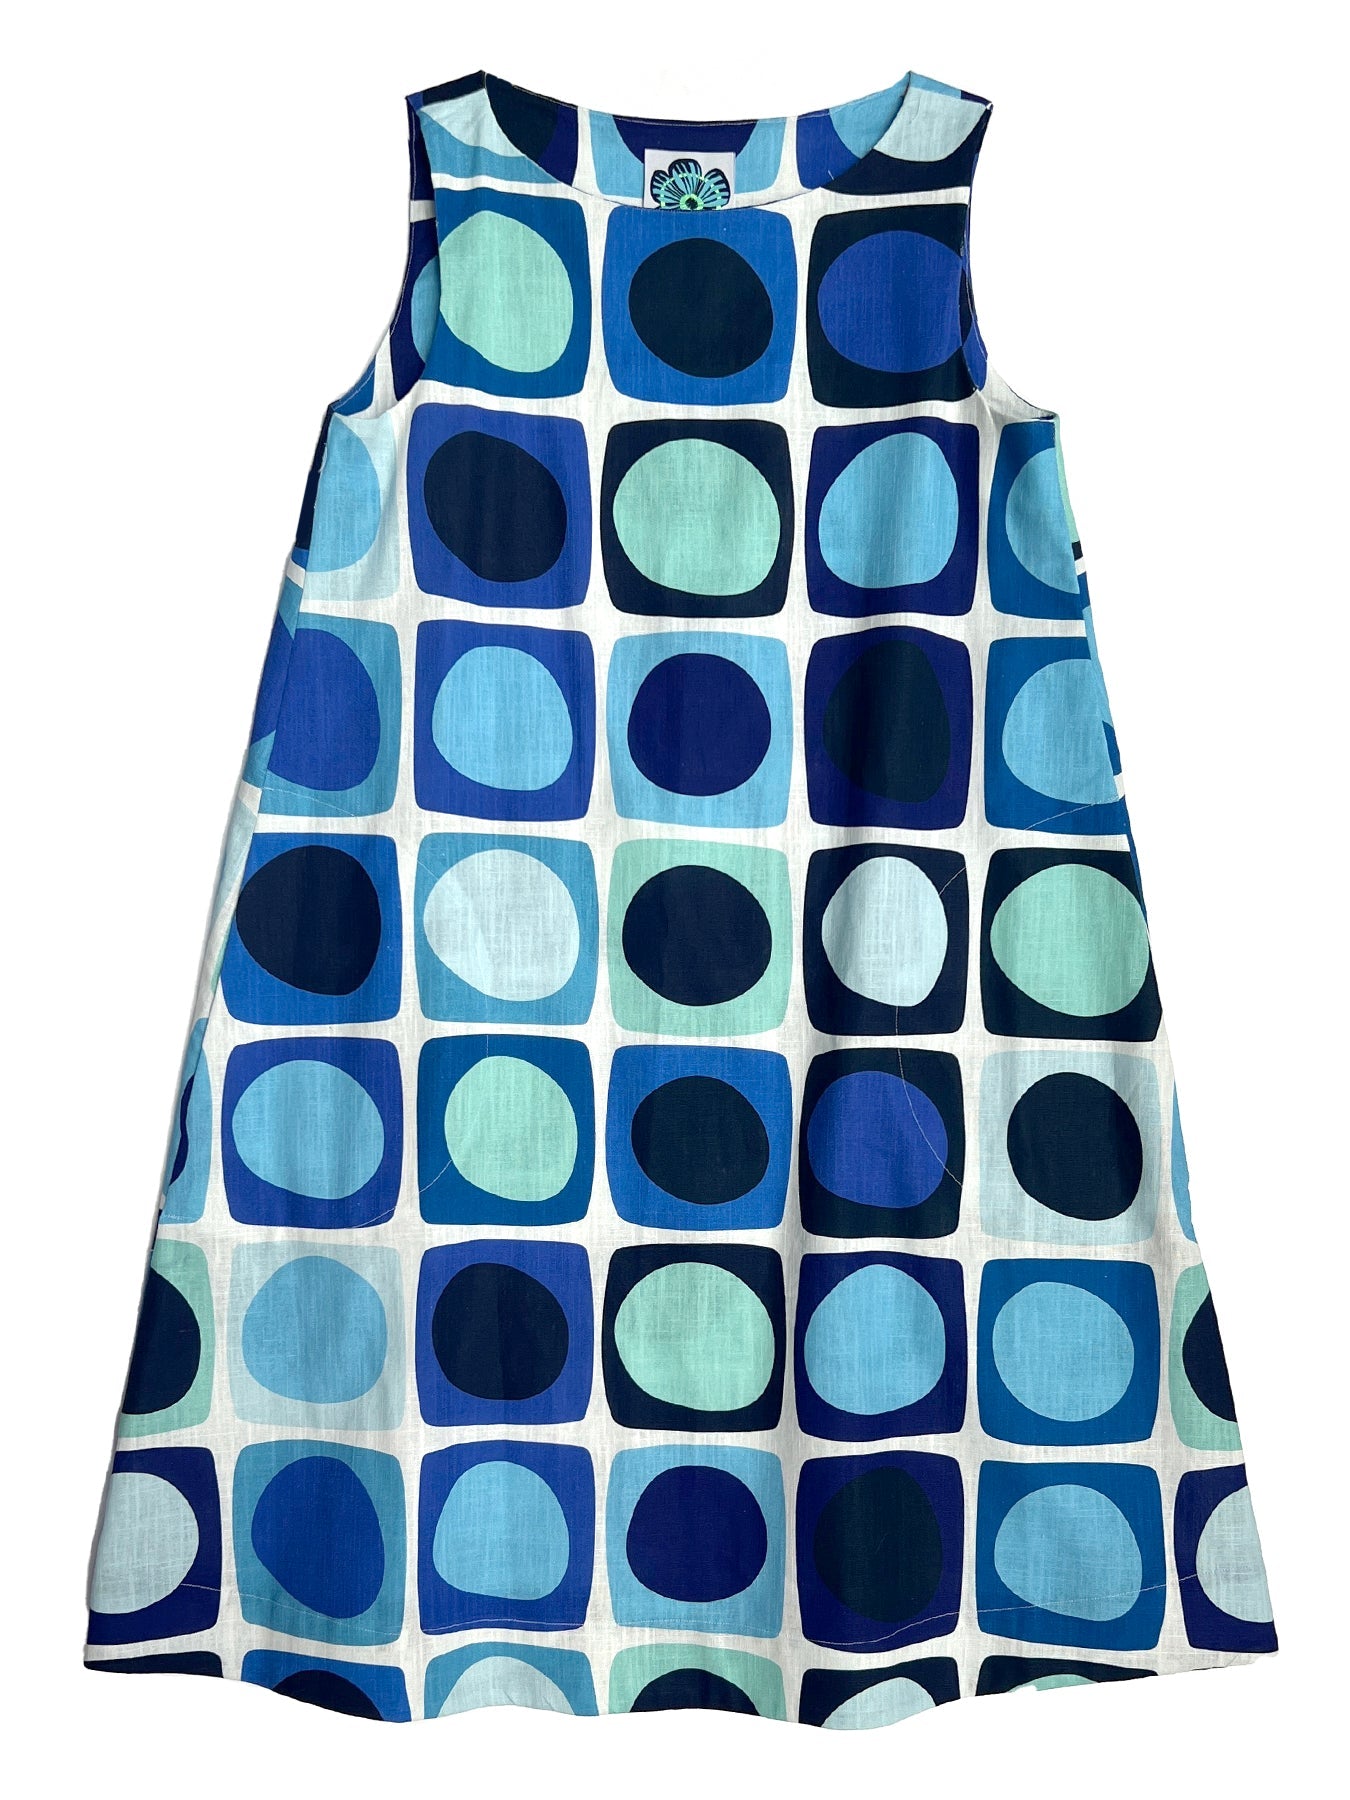 JUNIPER Sea Glass Blue - Lesley Evers-Best Seller-Blue-blue dress